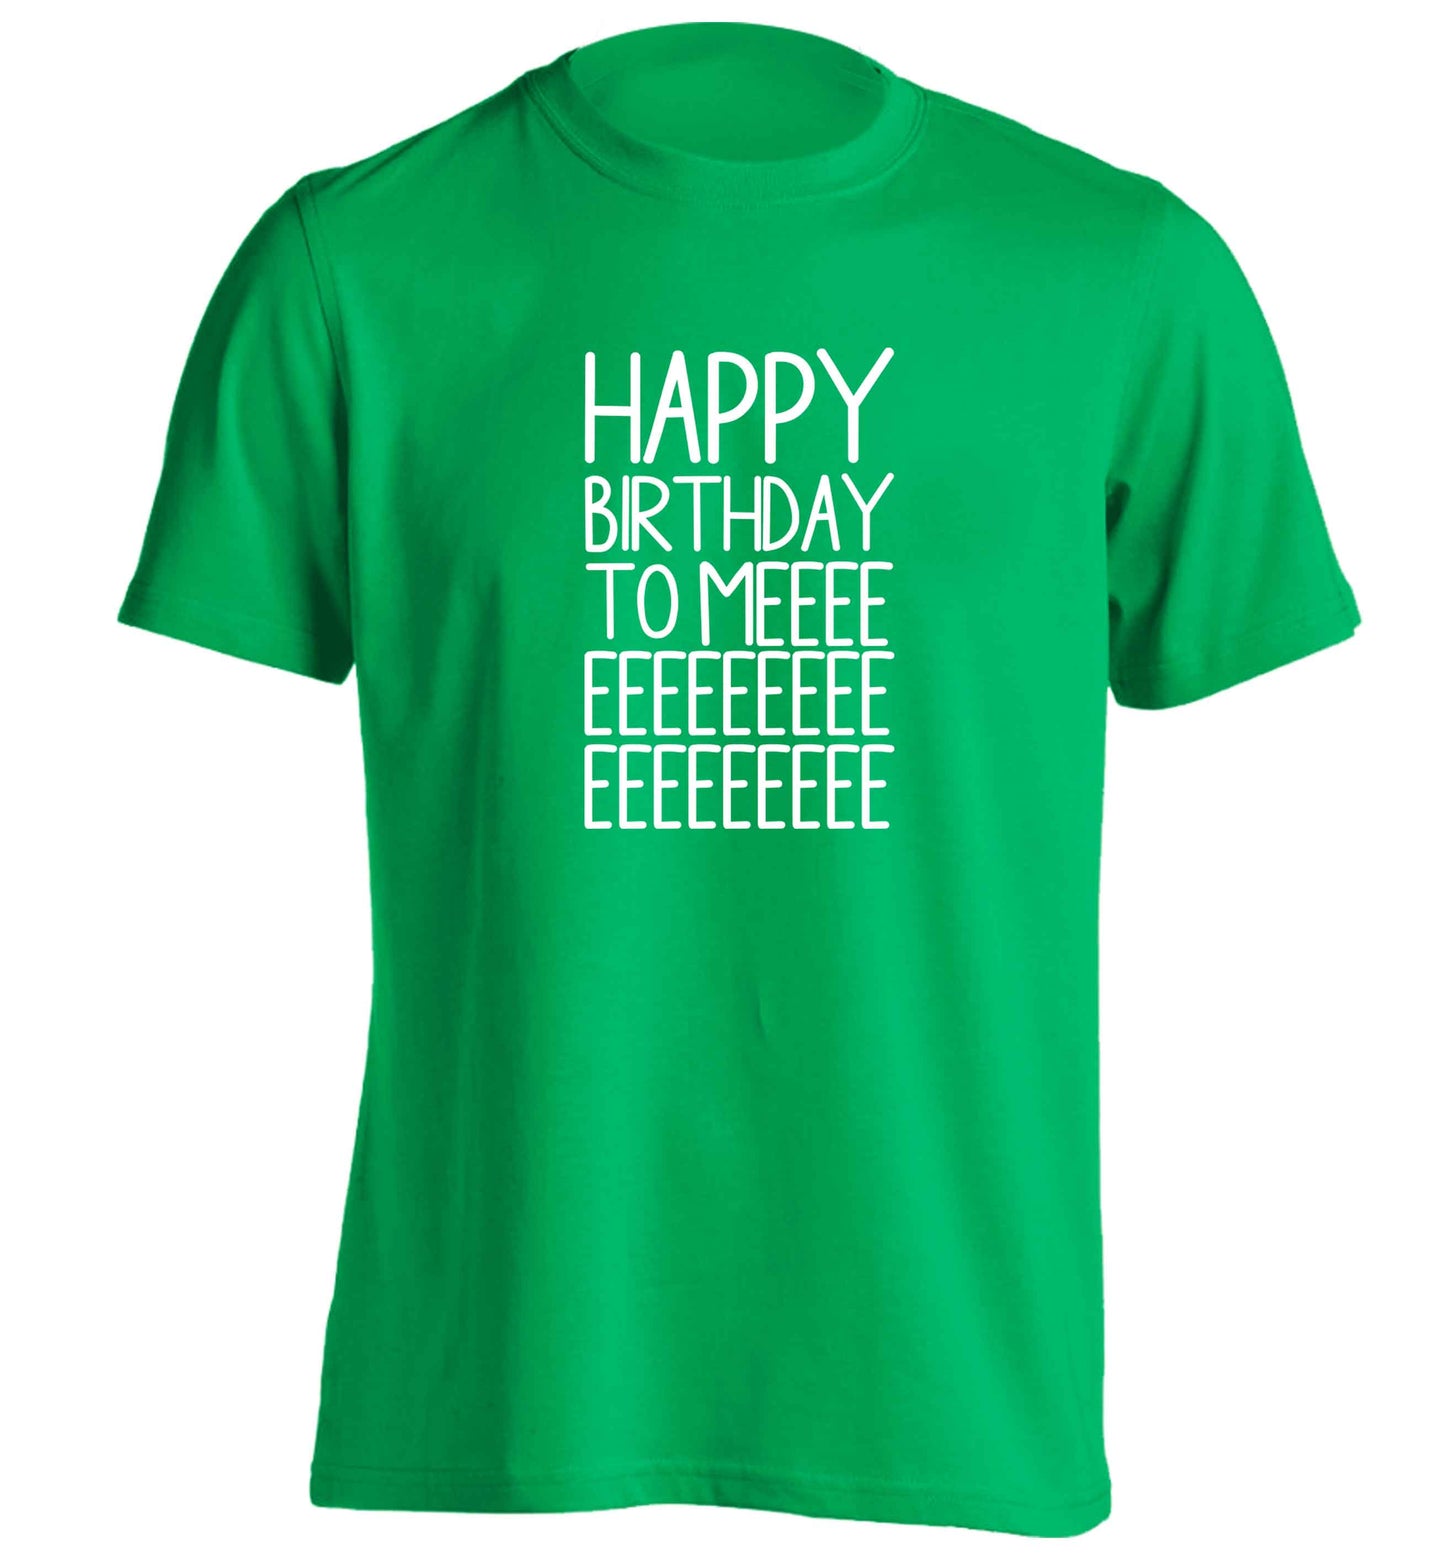 Happy birthday to me adults unisex green Tshirt 2XL